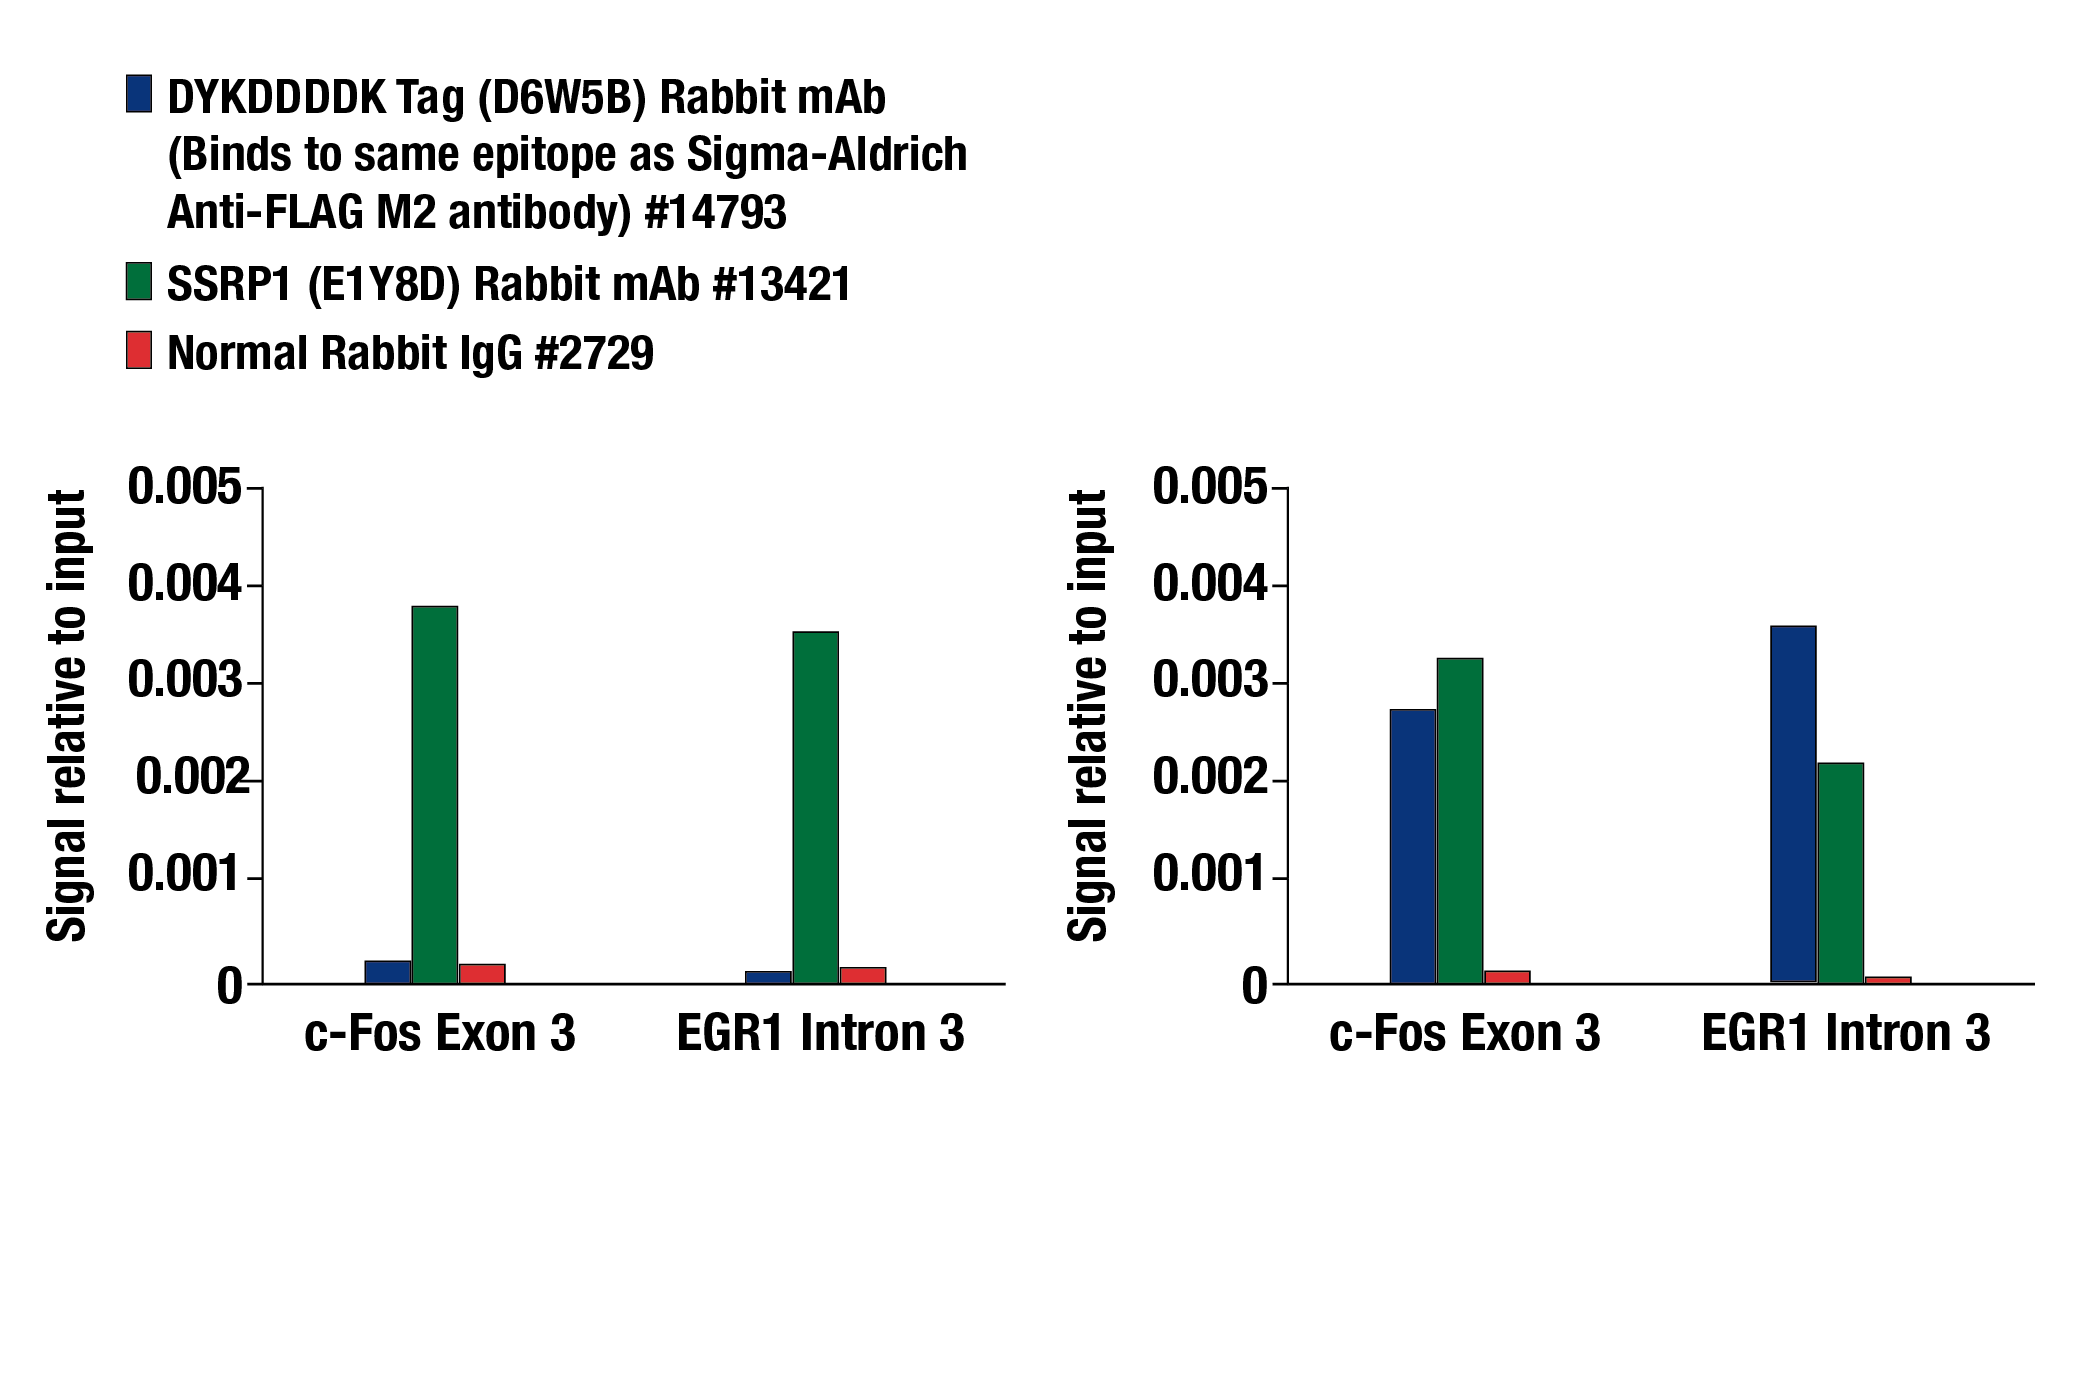 Chromatin Immunoprecipitation Image 1: DYKDDDDK Tag (D6W5B) Rabbit mAb (Binds to same epitope as Sigma-Aldrich Anti-FLAG M2 antibody)